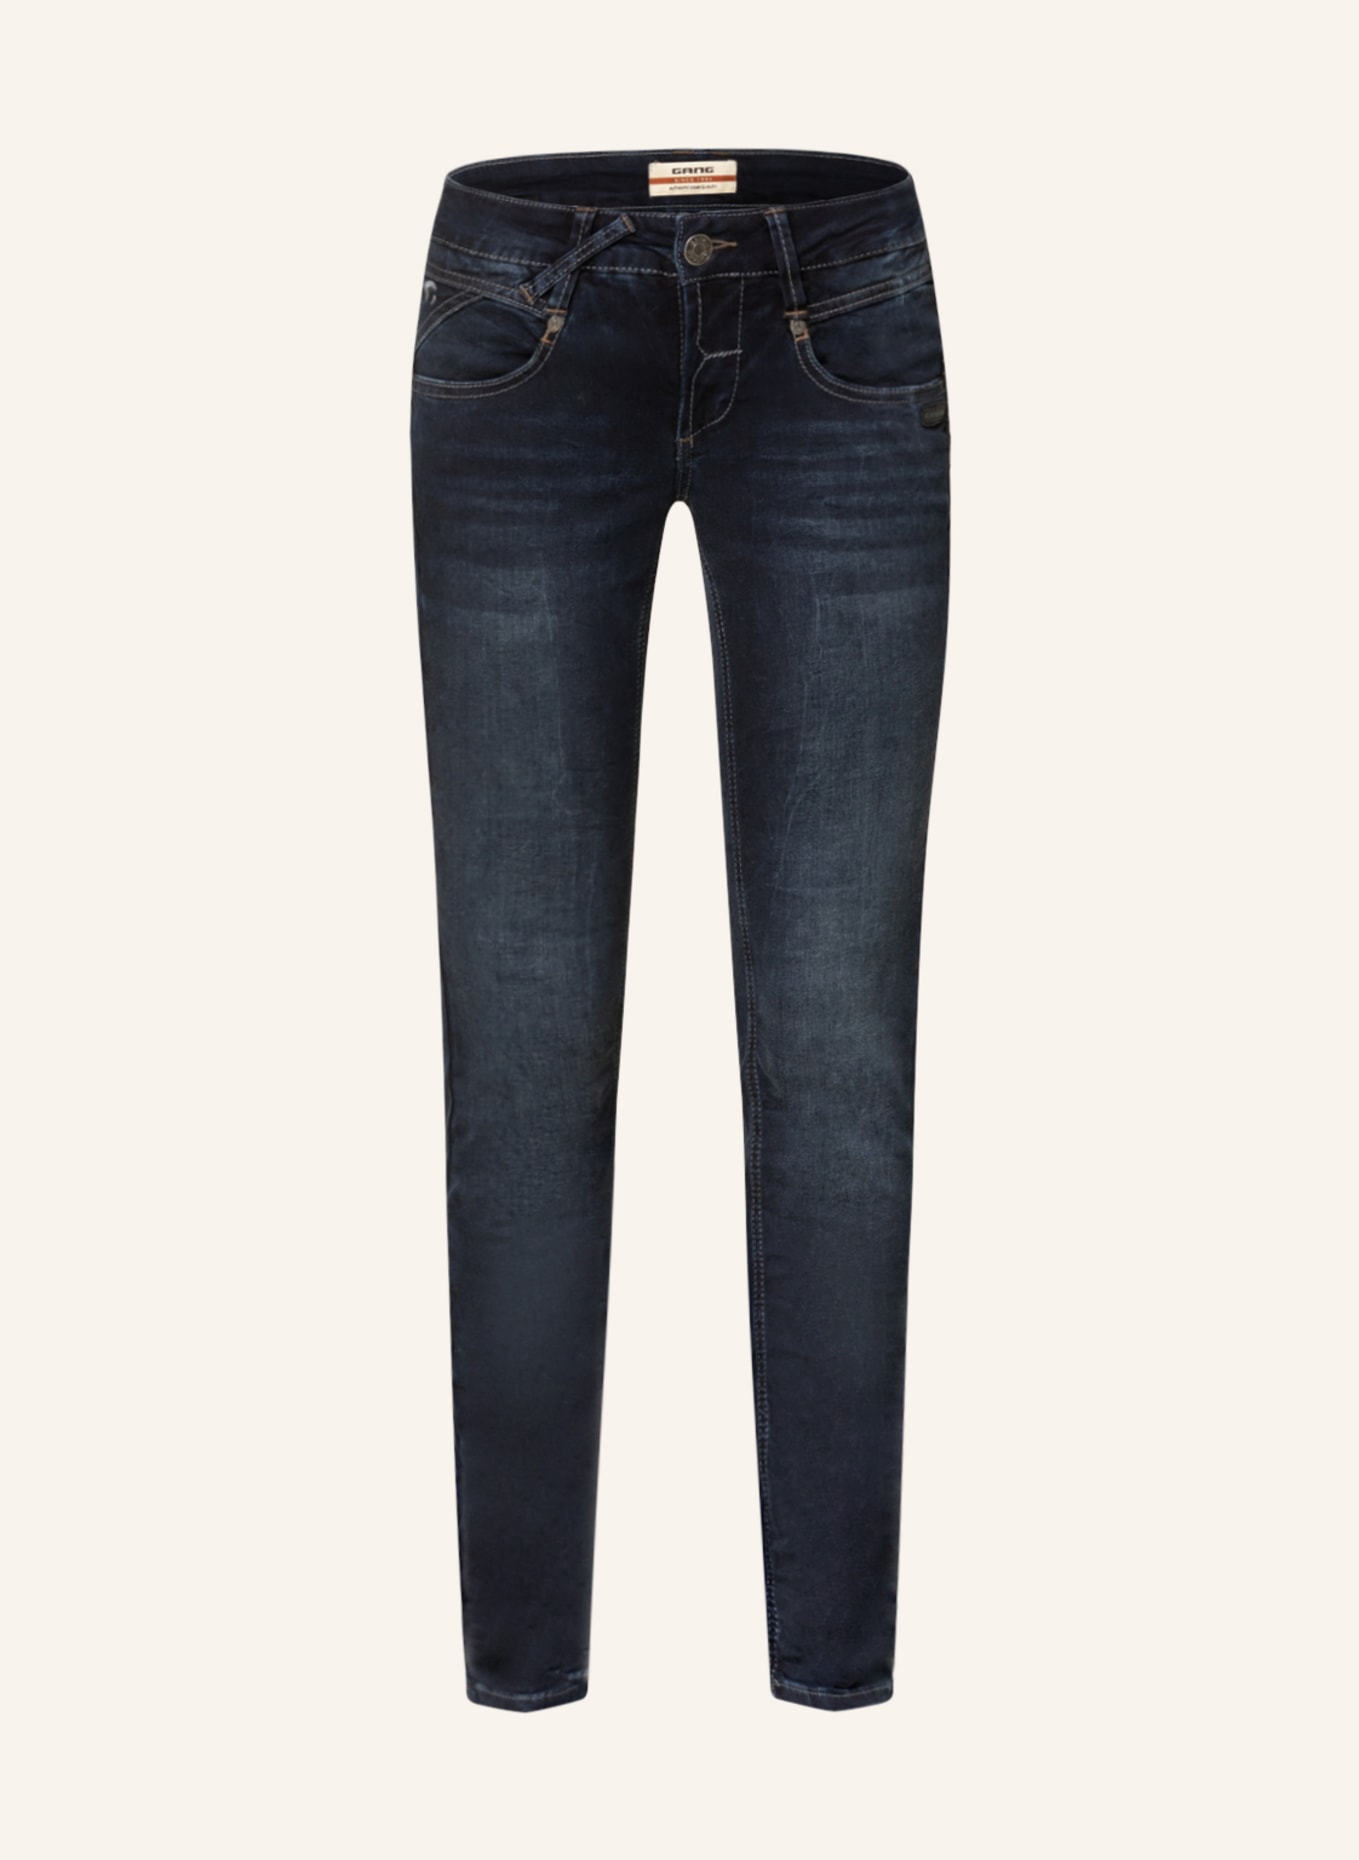 GANG Skinny Jeans NENA, Farbe: 7153 brown dream wash (Bild 1)